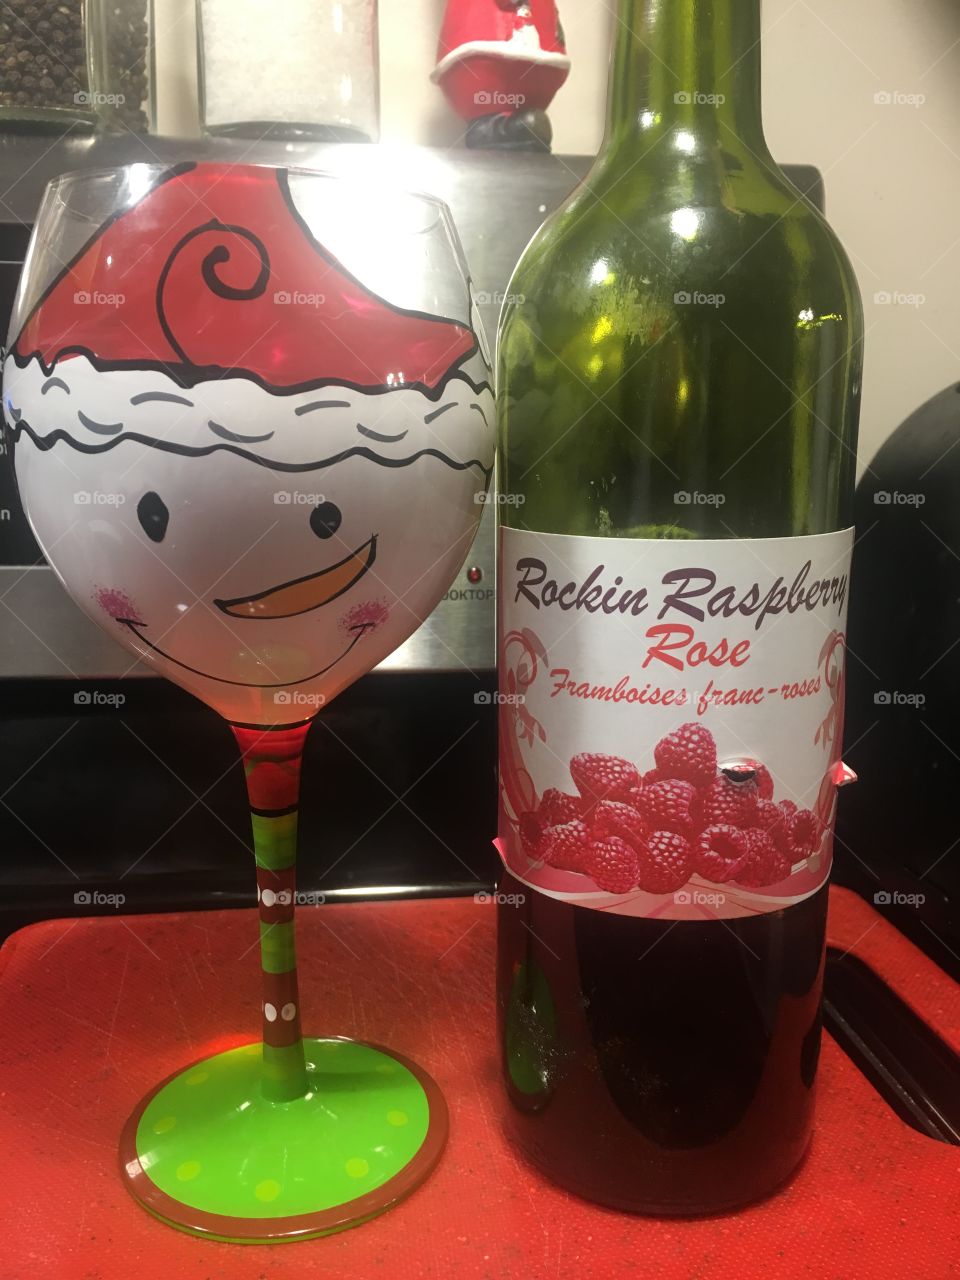 Homemade rose wine in a festive wine glass 